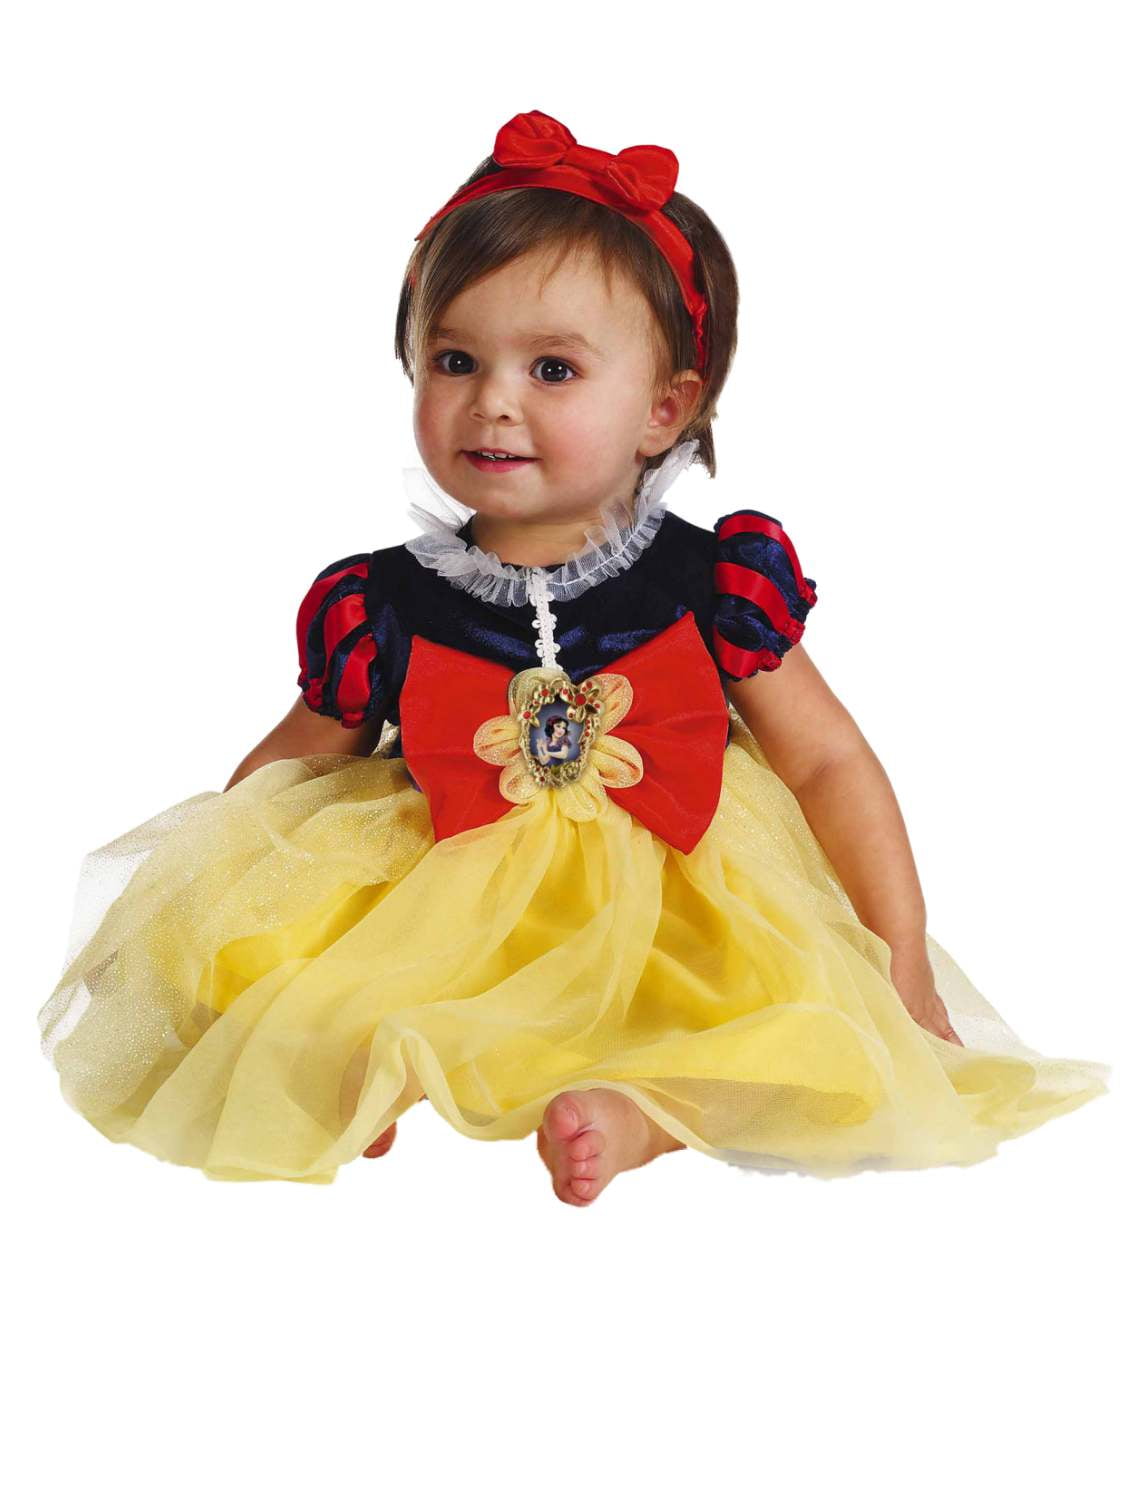 Disney Costume Infant - Walmart.com - Walmart.com